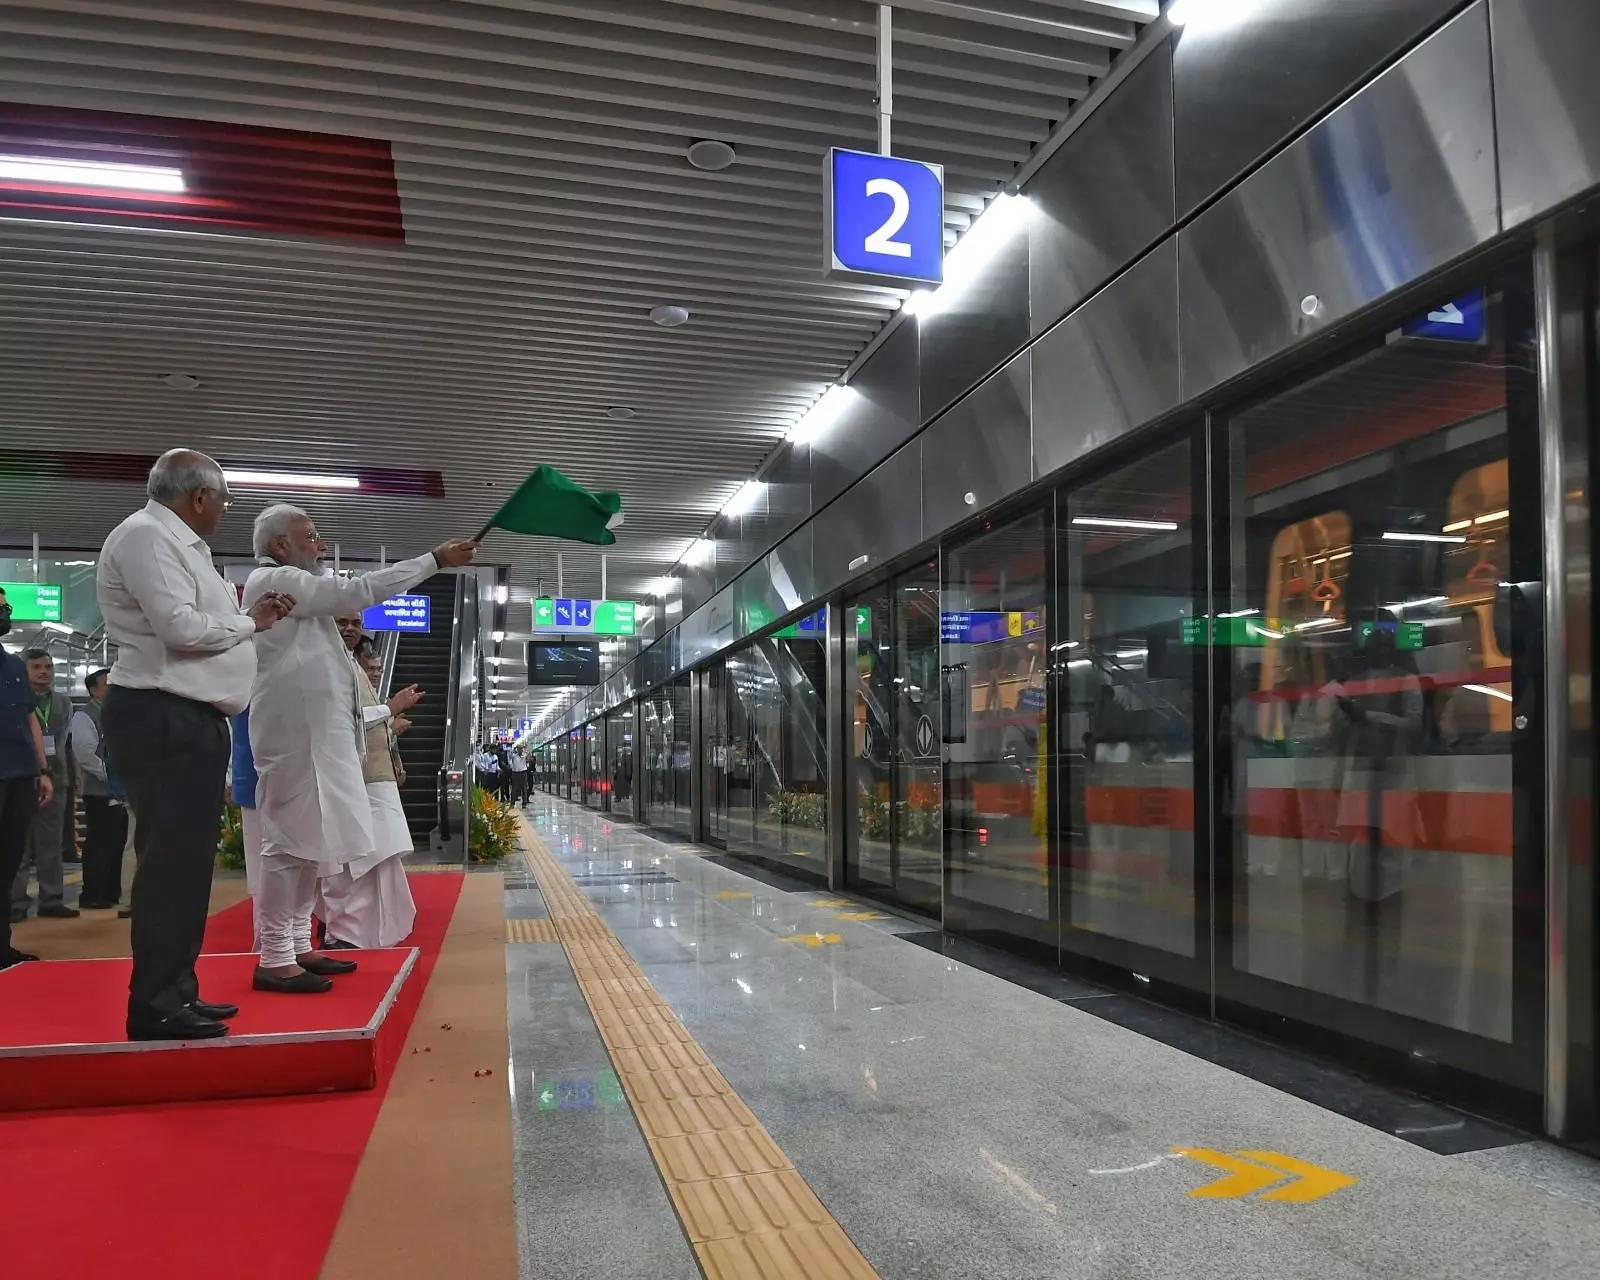 एक साल में अहमदाबाद की लाइफ लाइन बन गई मेट्रो ट्रेन सेवा